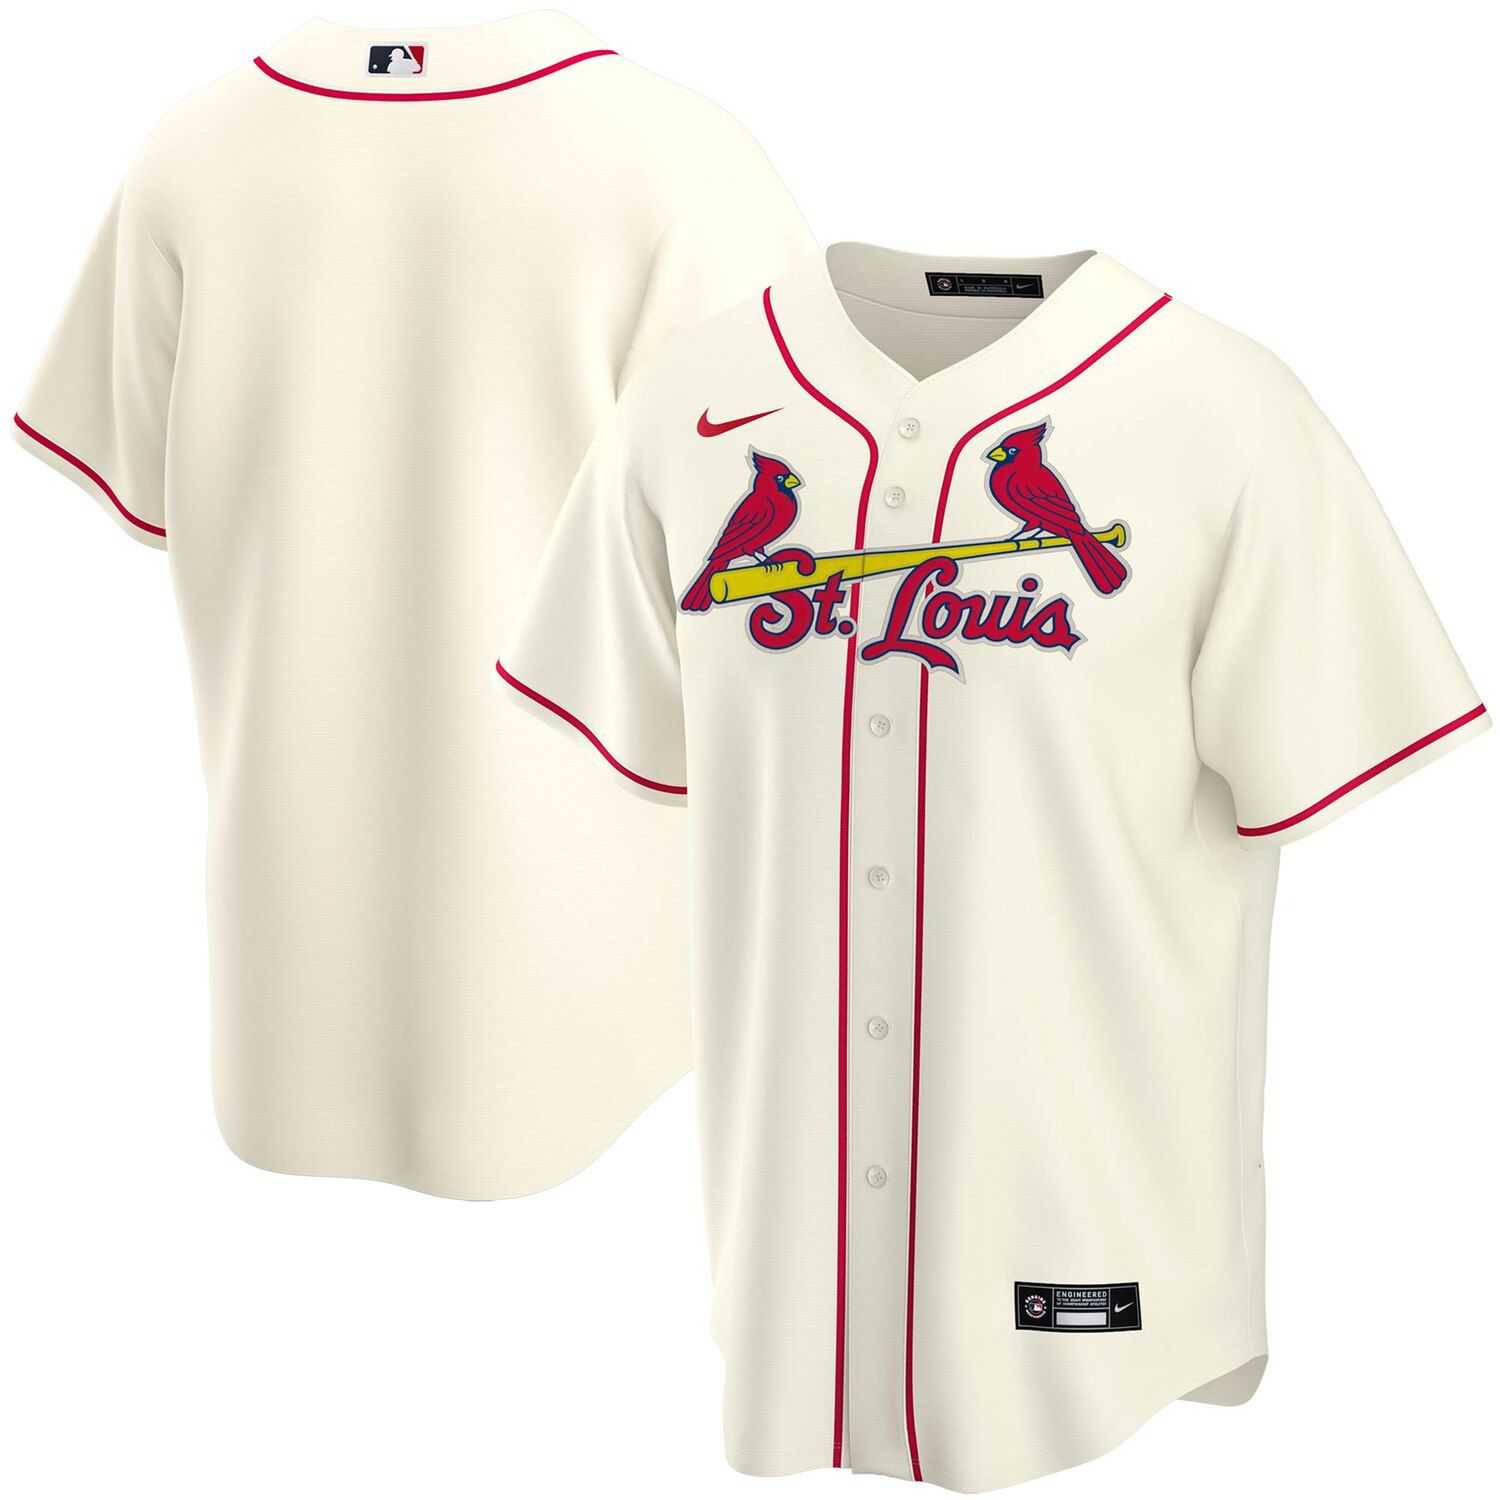 stl cardinals alternate jersey